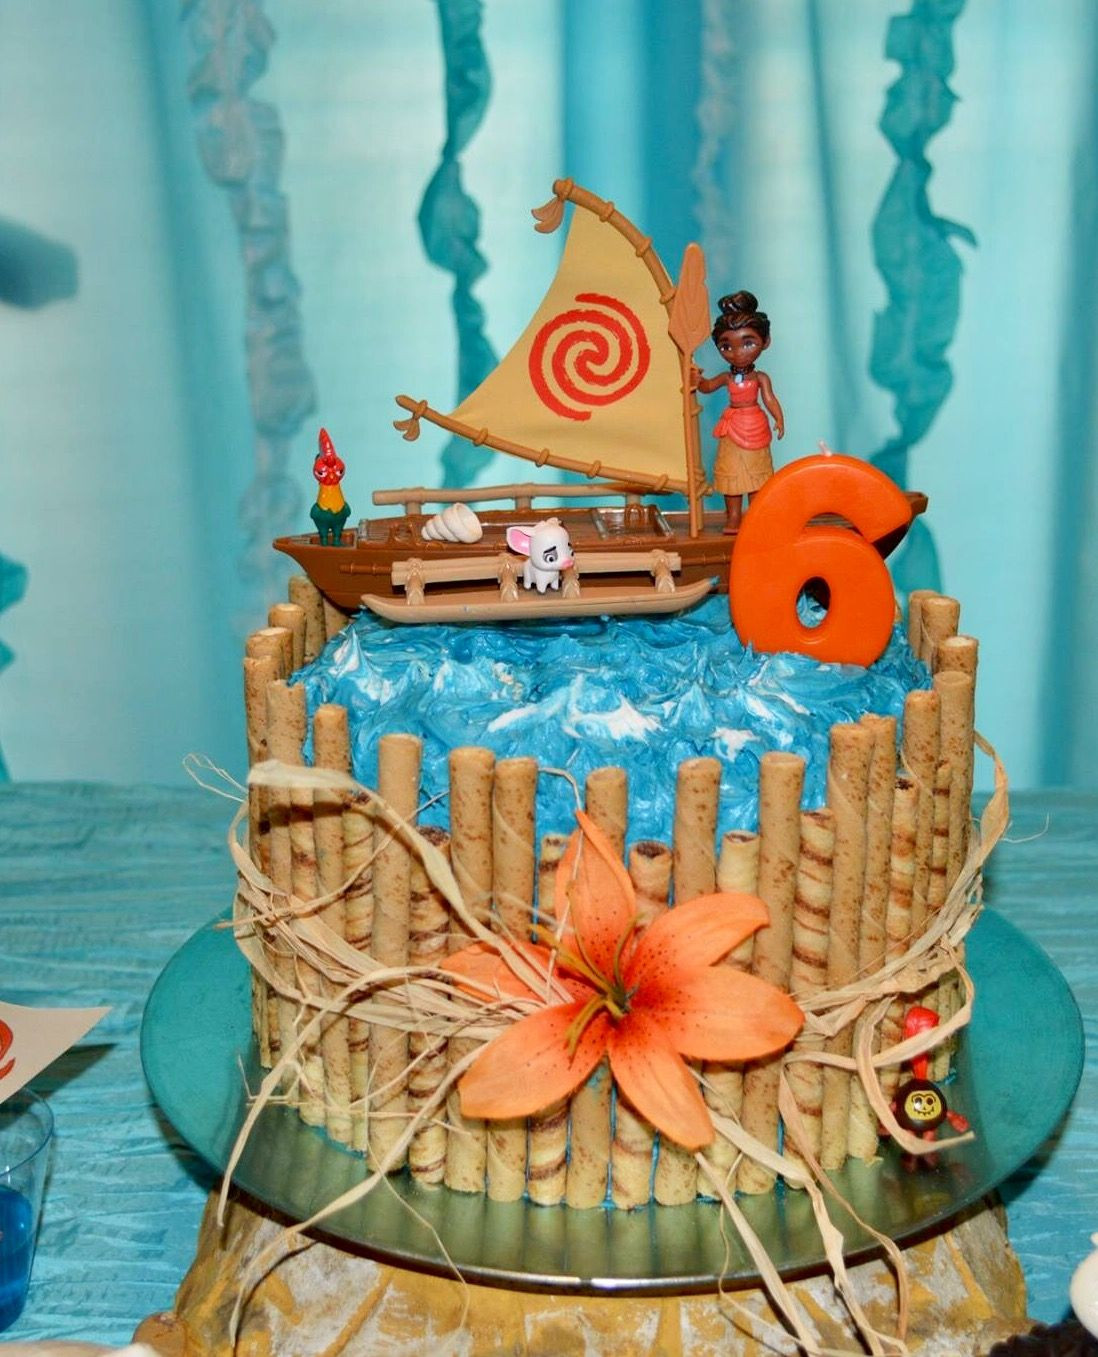 Best ideas about Moana Birthday Cake Ideas
. Save or Pin Moana Party Cake Moana Party Pinterest Now.